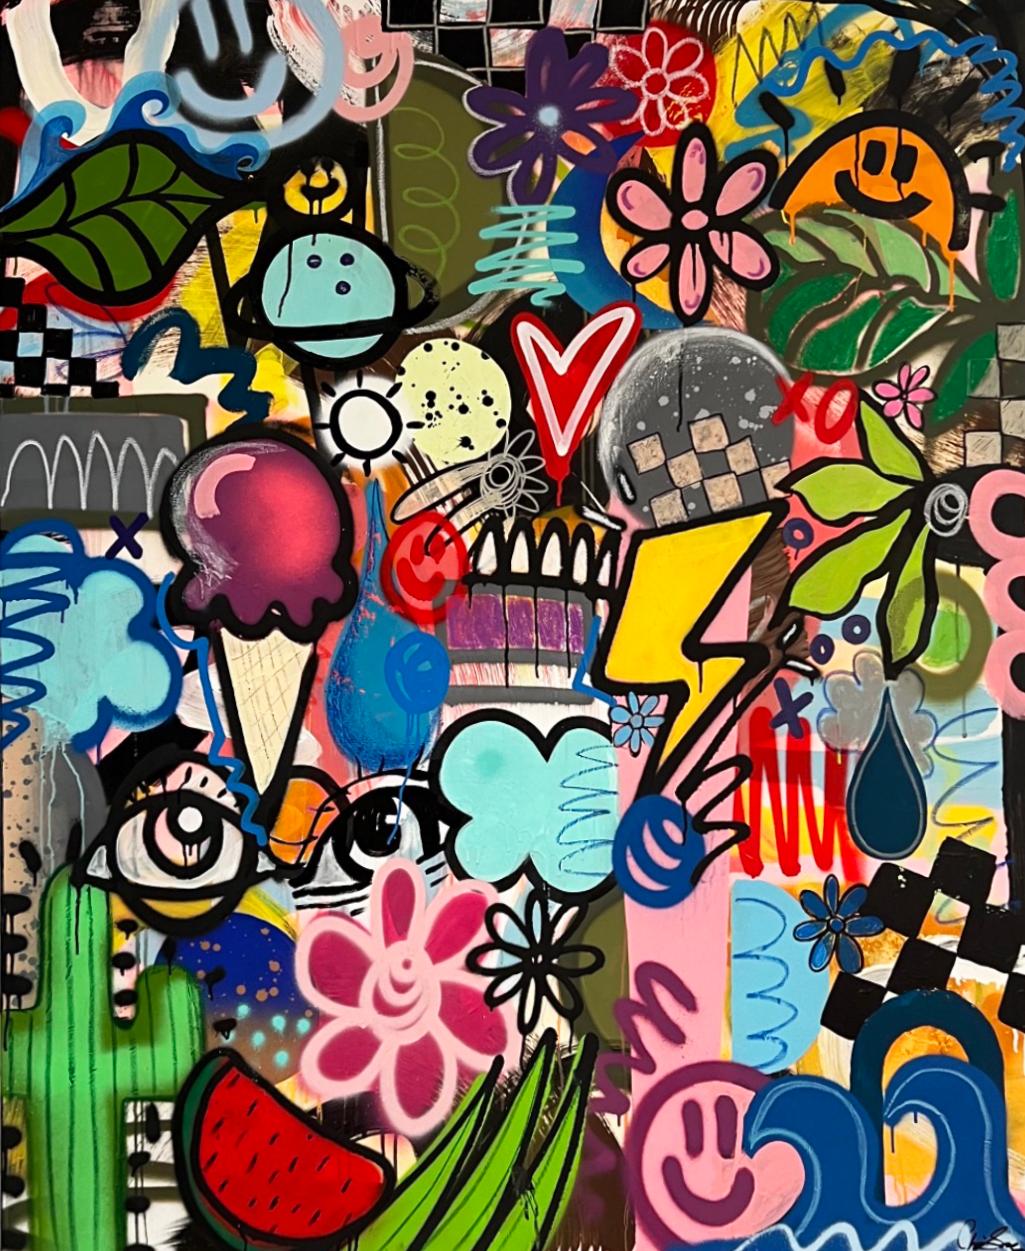 Chris Solcz Abstract Painting – Tropic Thunder, großes abstraktes, farbenfrohes Graffiti-Abstraktes Gemälde auf Leinwand, 2022